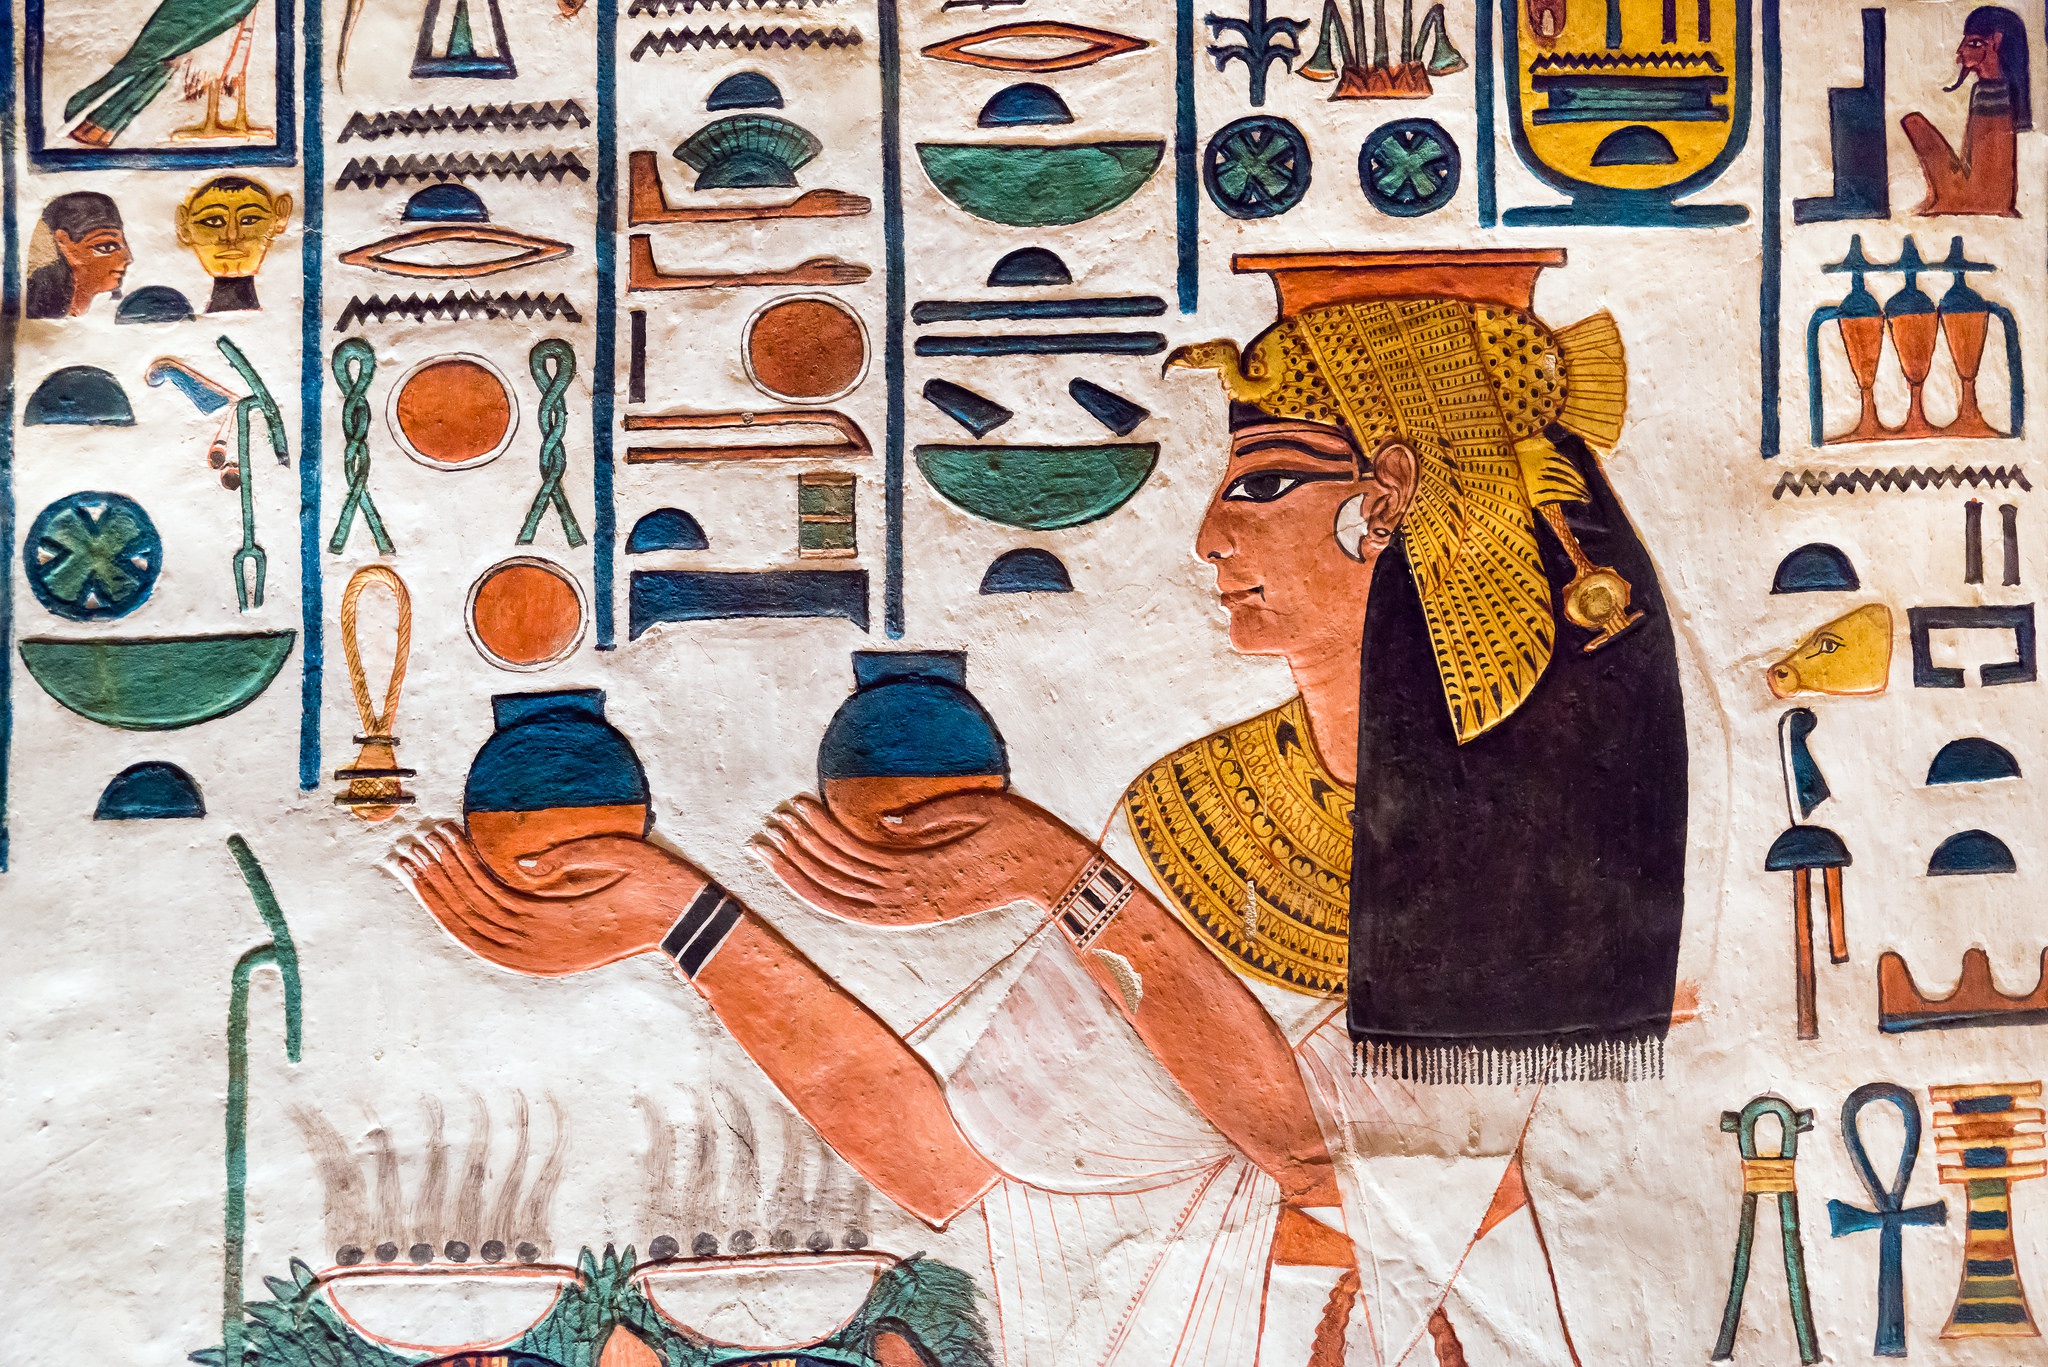 General 2048x1367 Egypt hieroglyphics colorful ancient